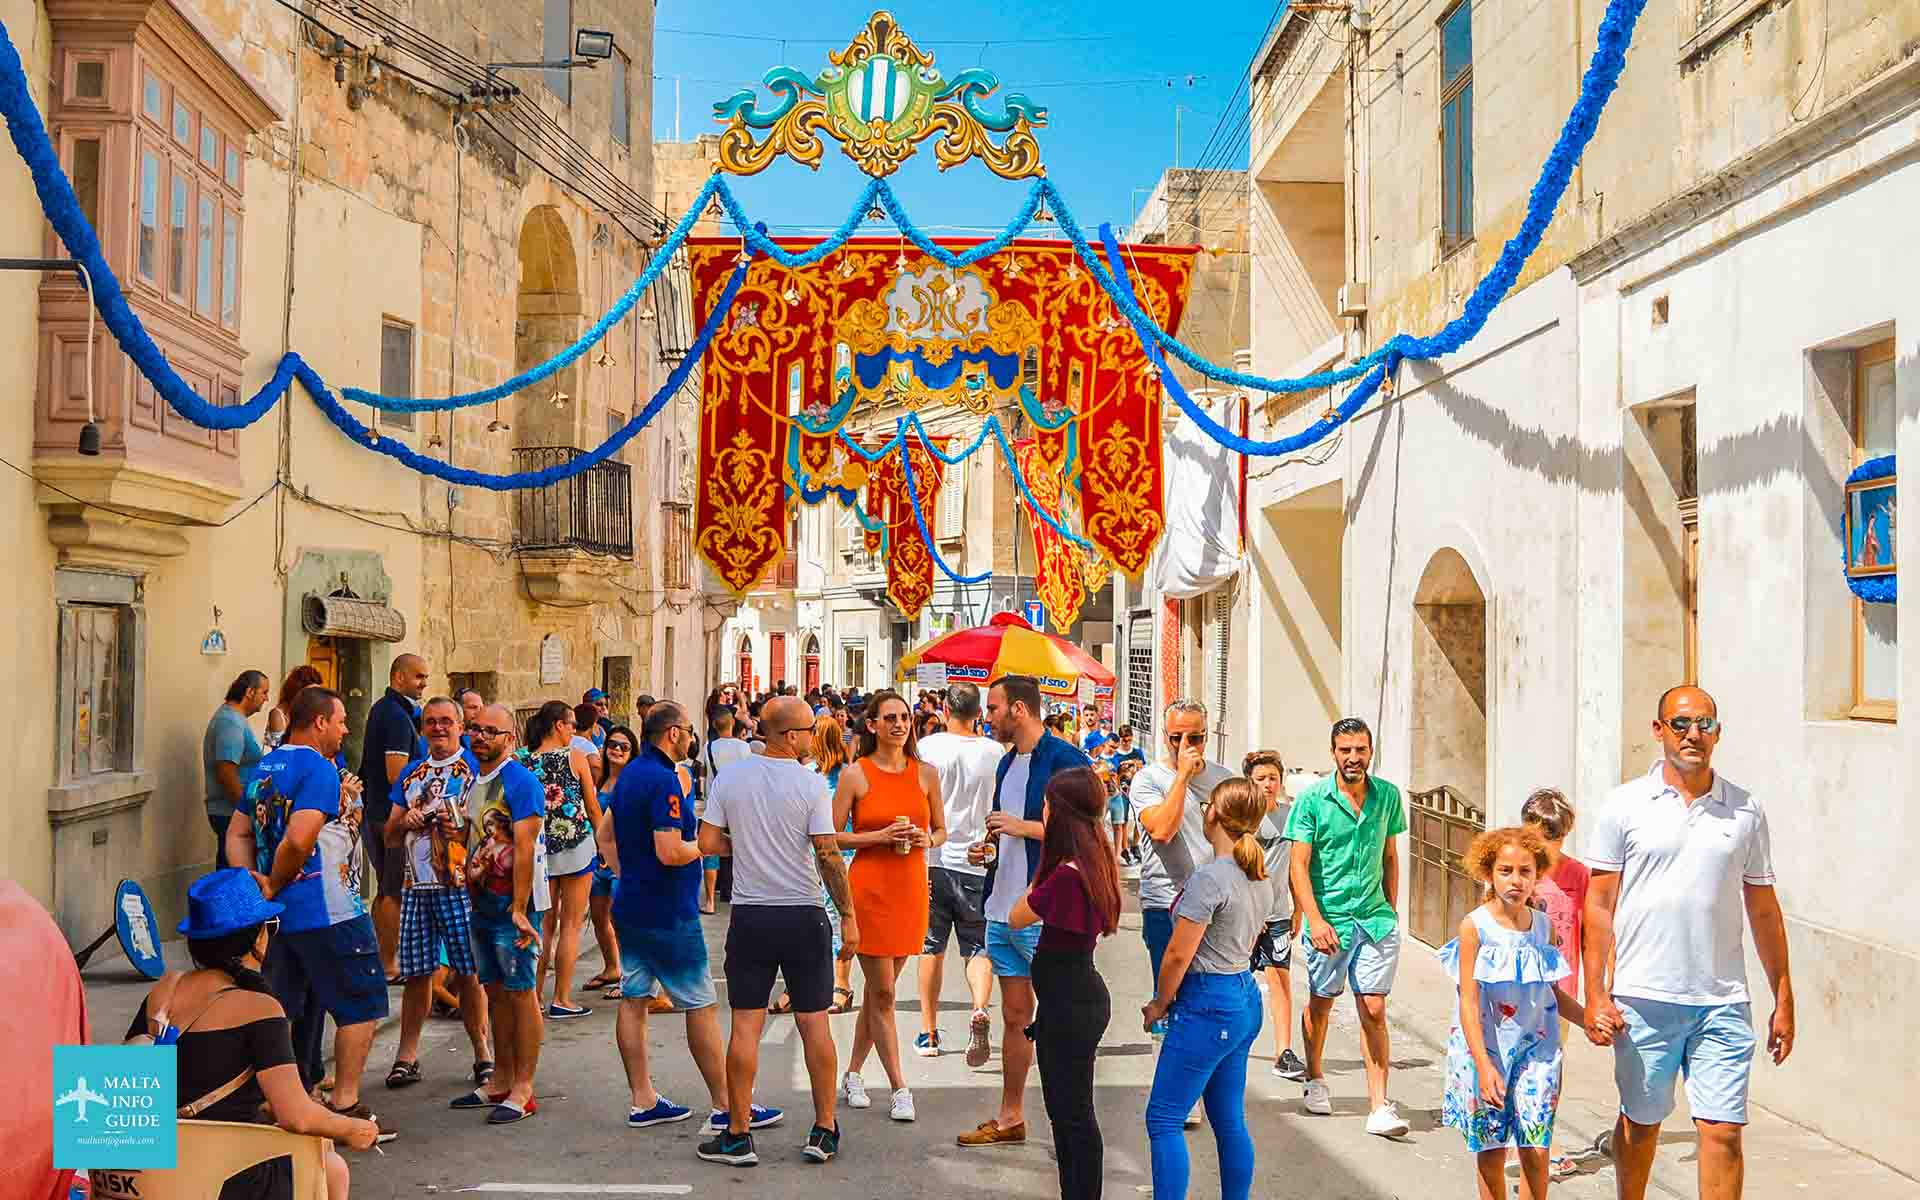 People gathered around for Hal Tarxien Malta village feast